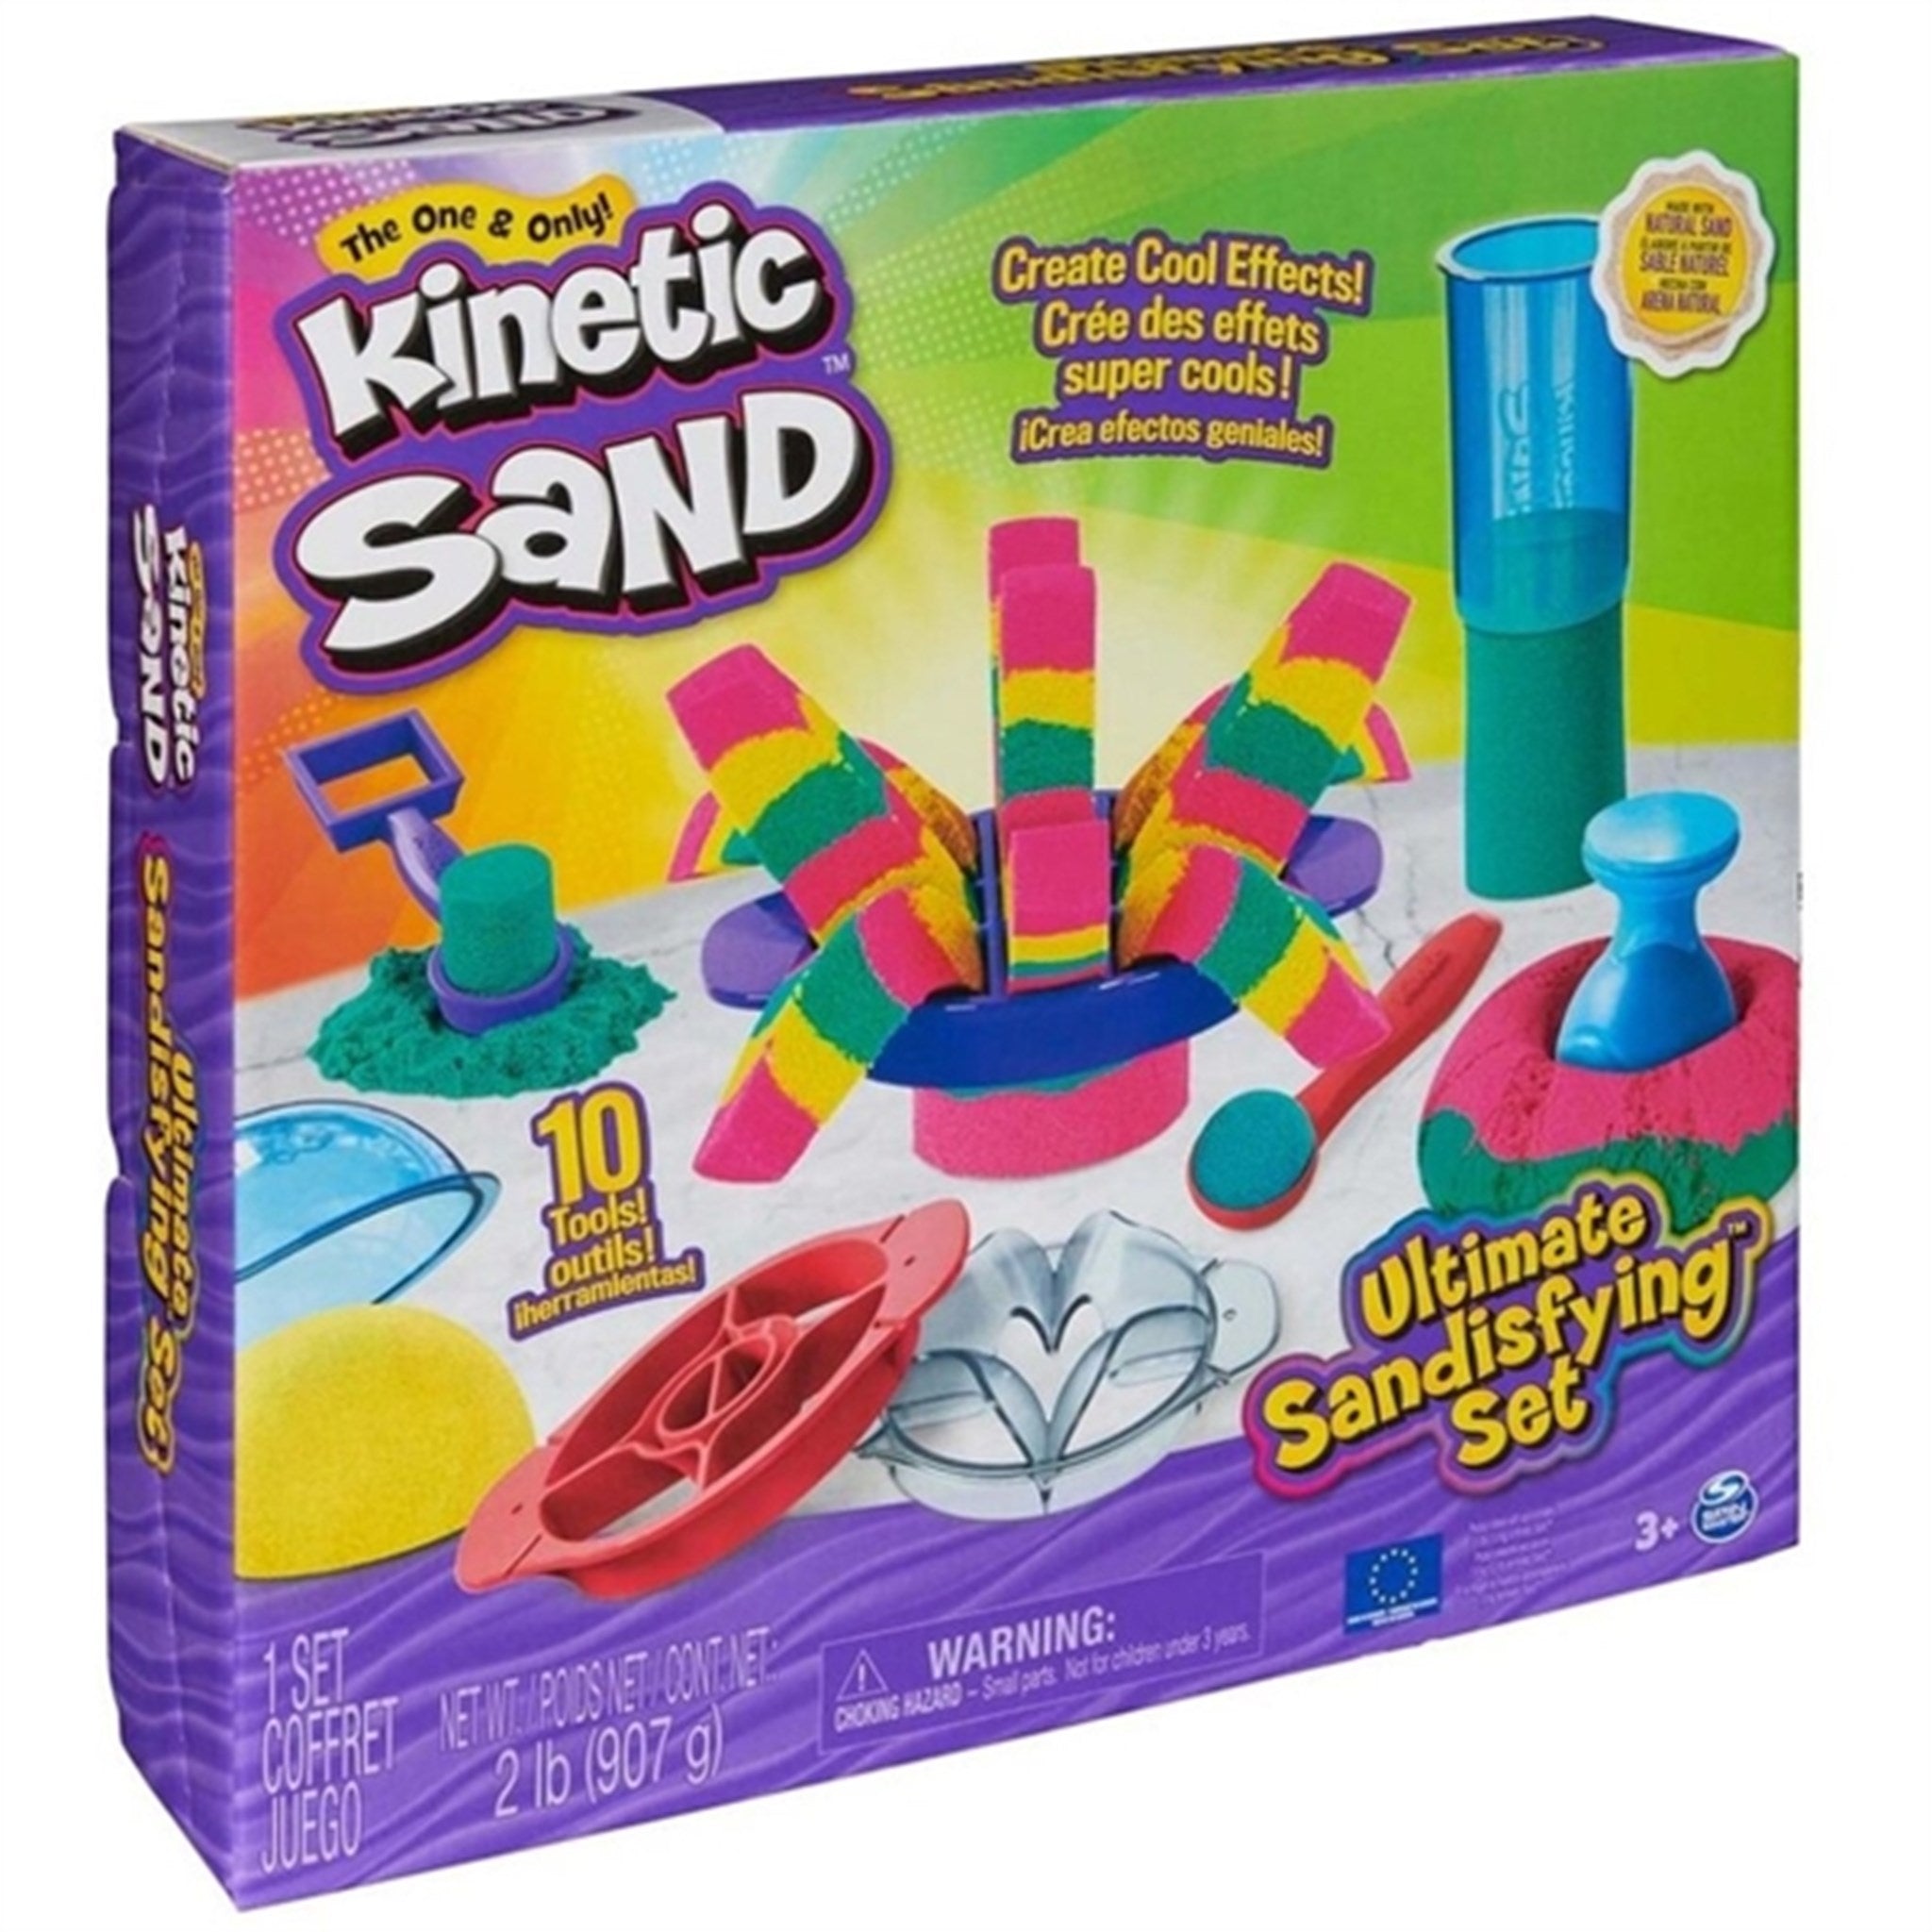 Kinetic Sand Ultimate Sandisfying Sett